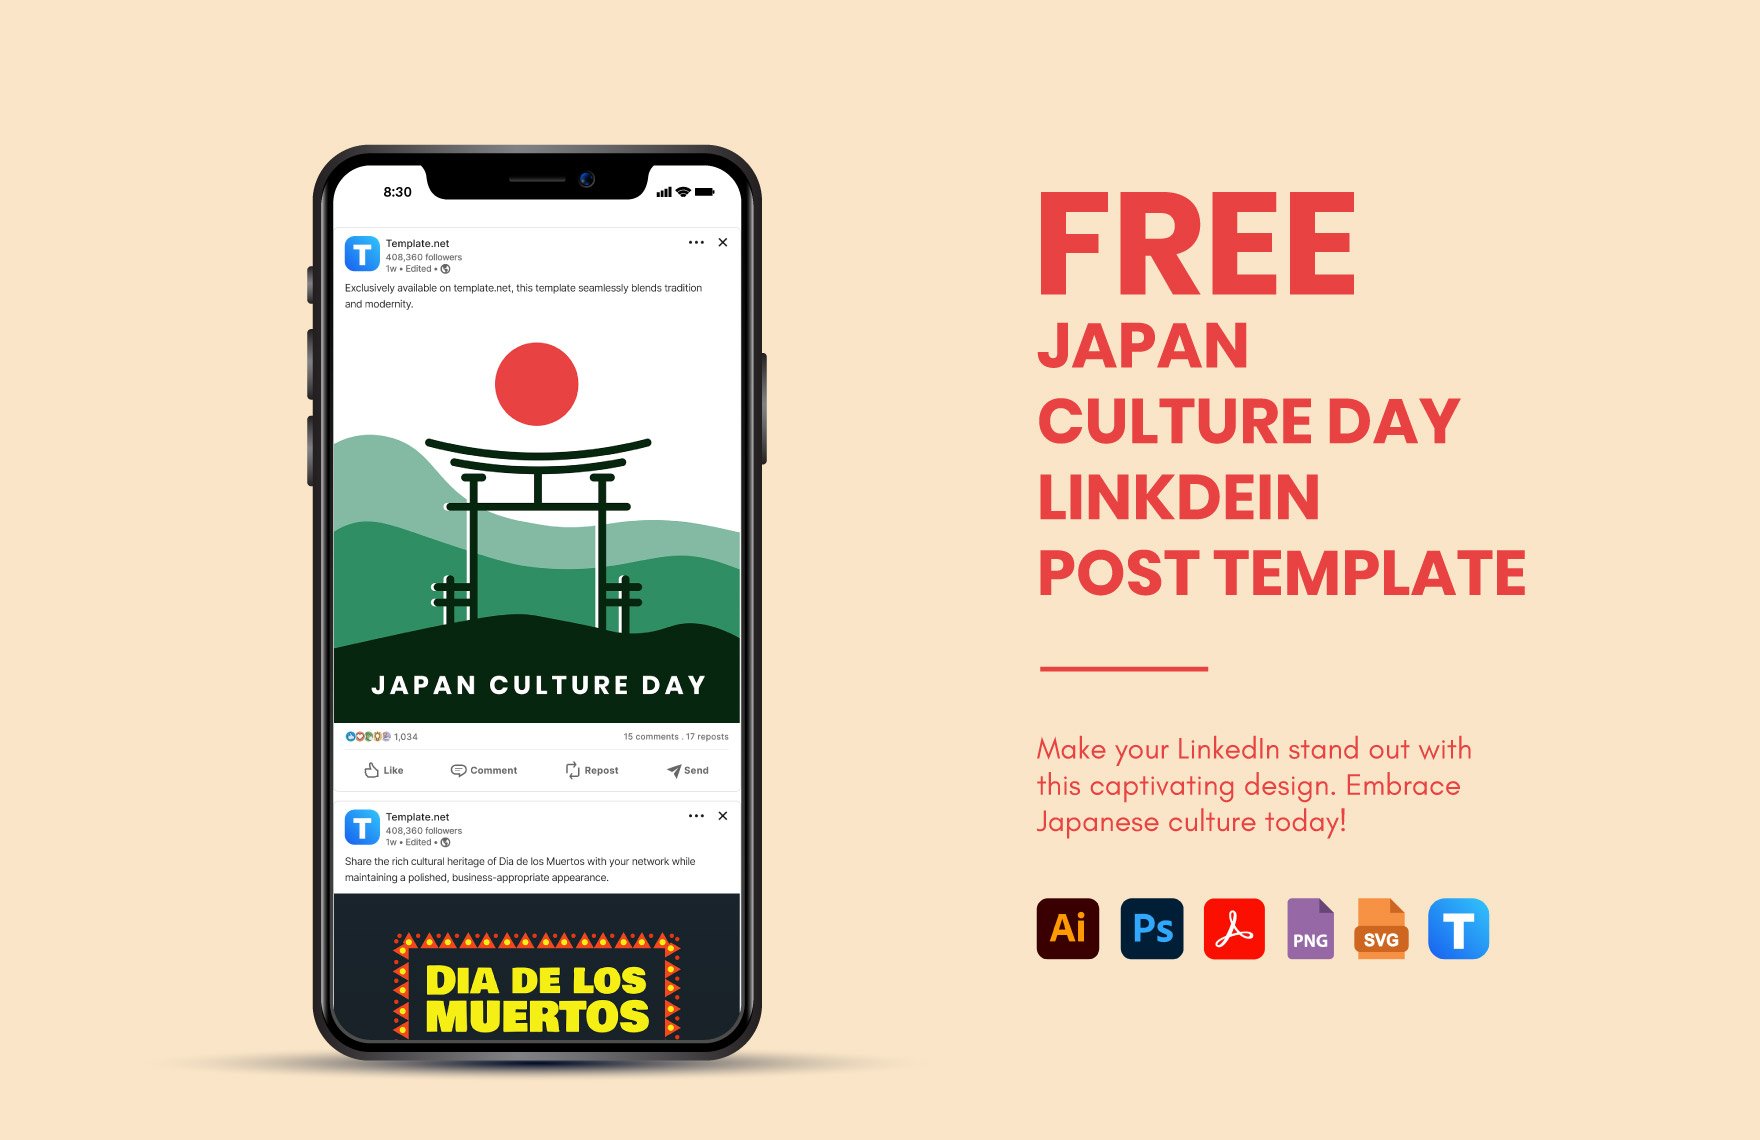 Japan Culture Day LinkedIn Post Template